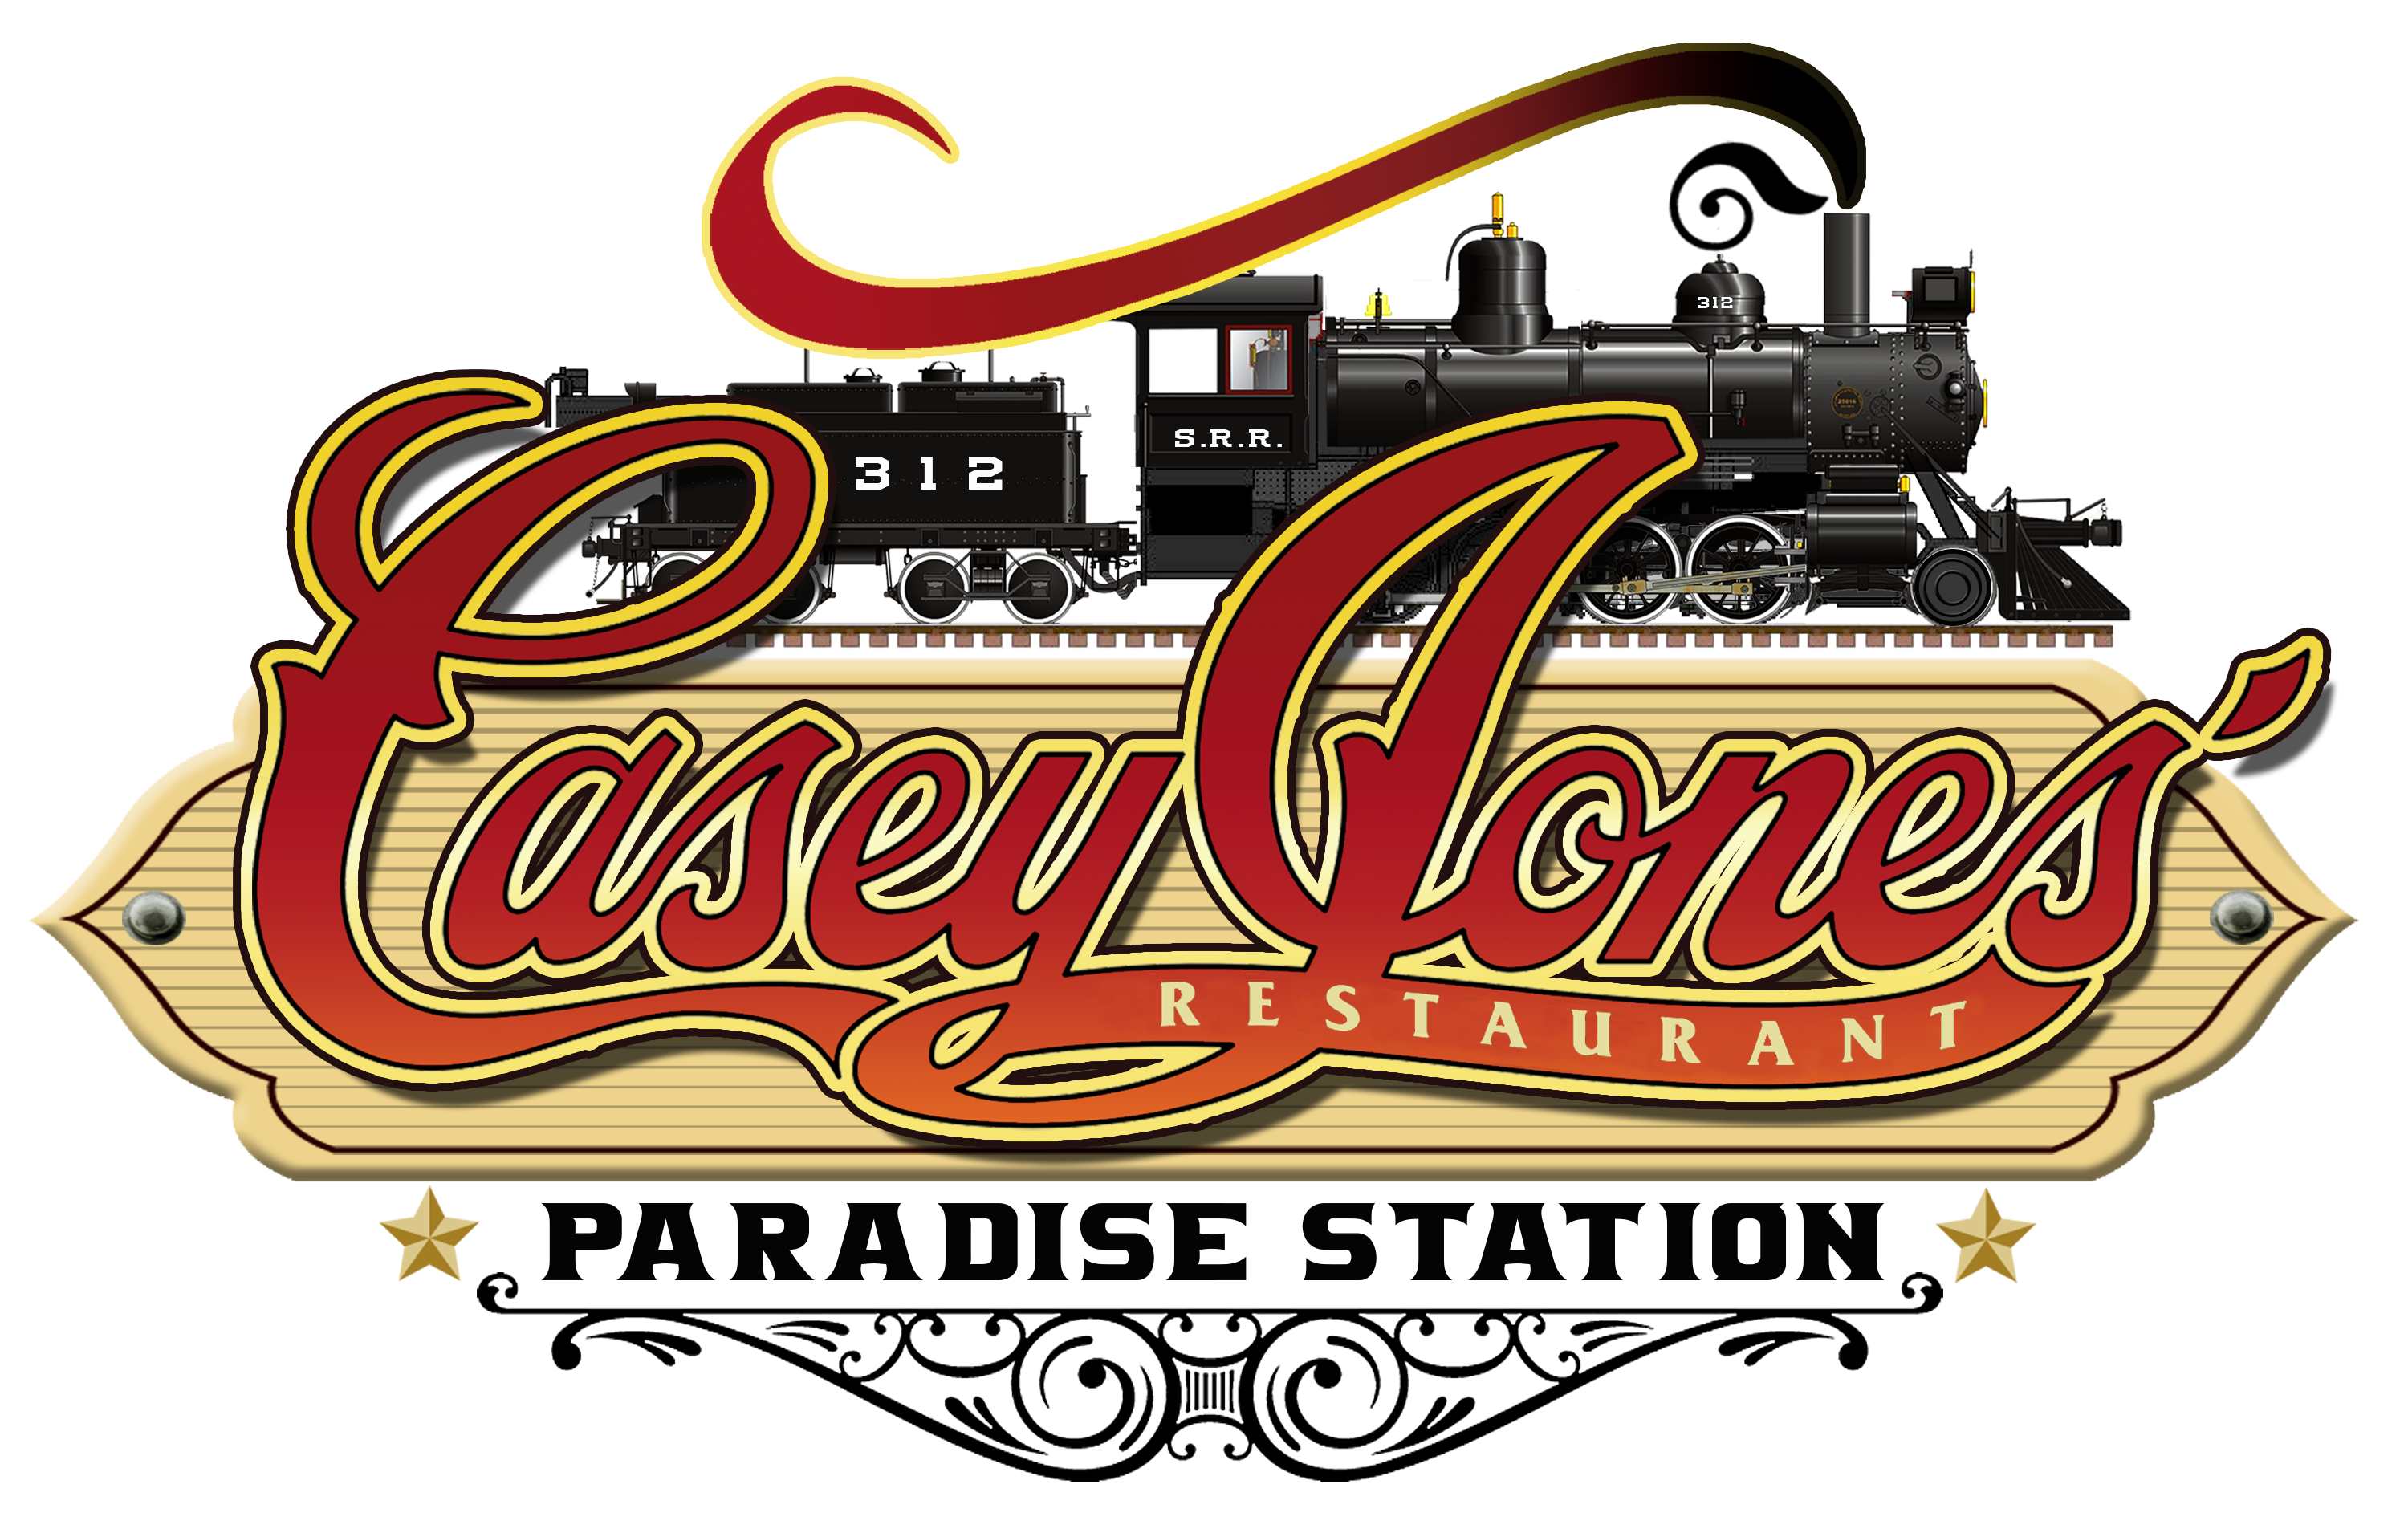 Casey Jones' Restaurant logo